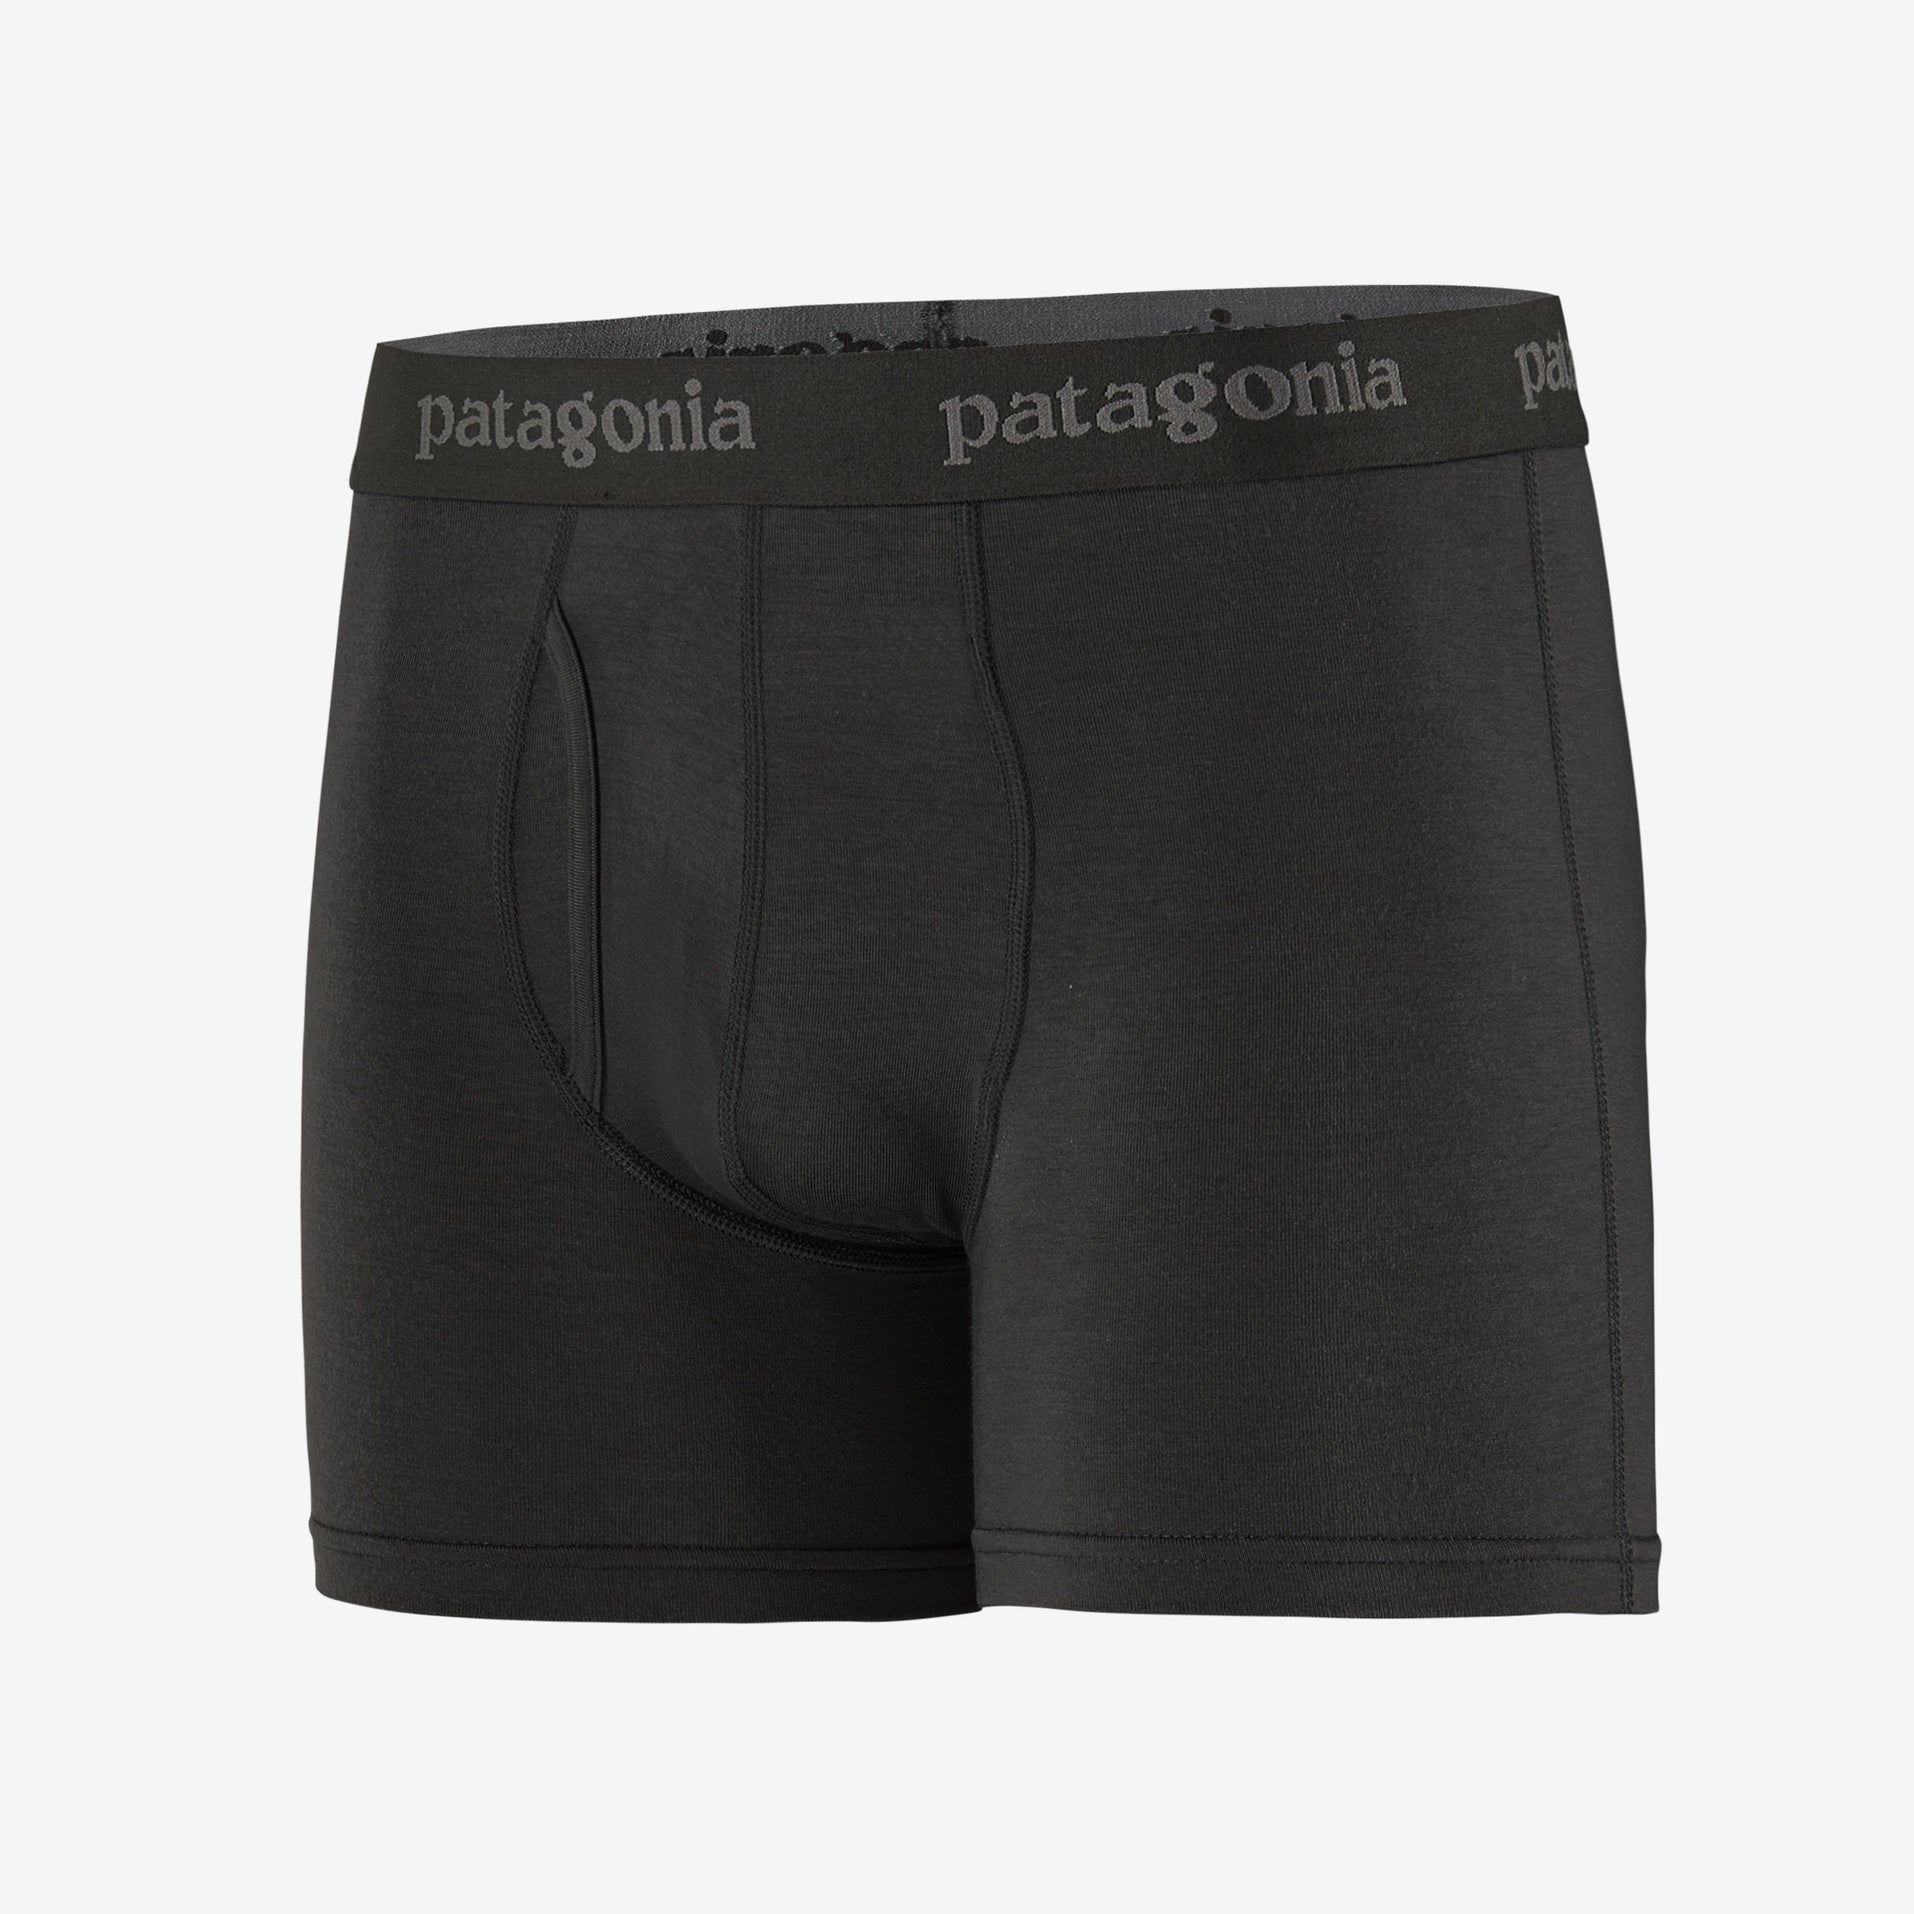 Patagonia Essential Boxer Briefs 3" (Men's) - Find Your Feet Australia Hobart Launceston Tasmania - Black